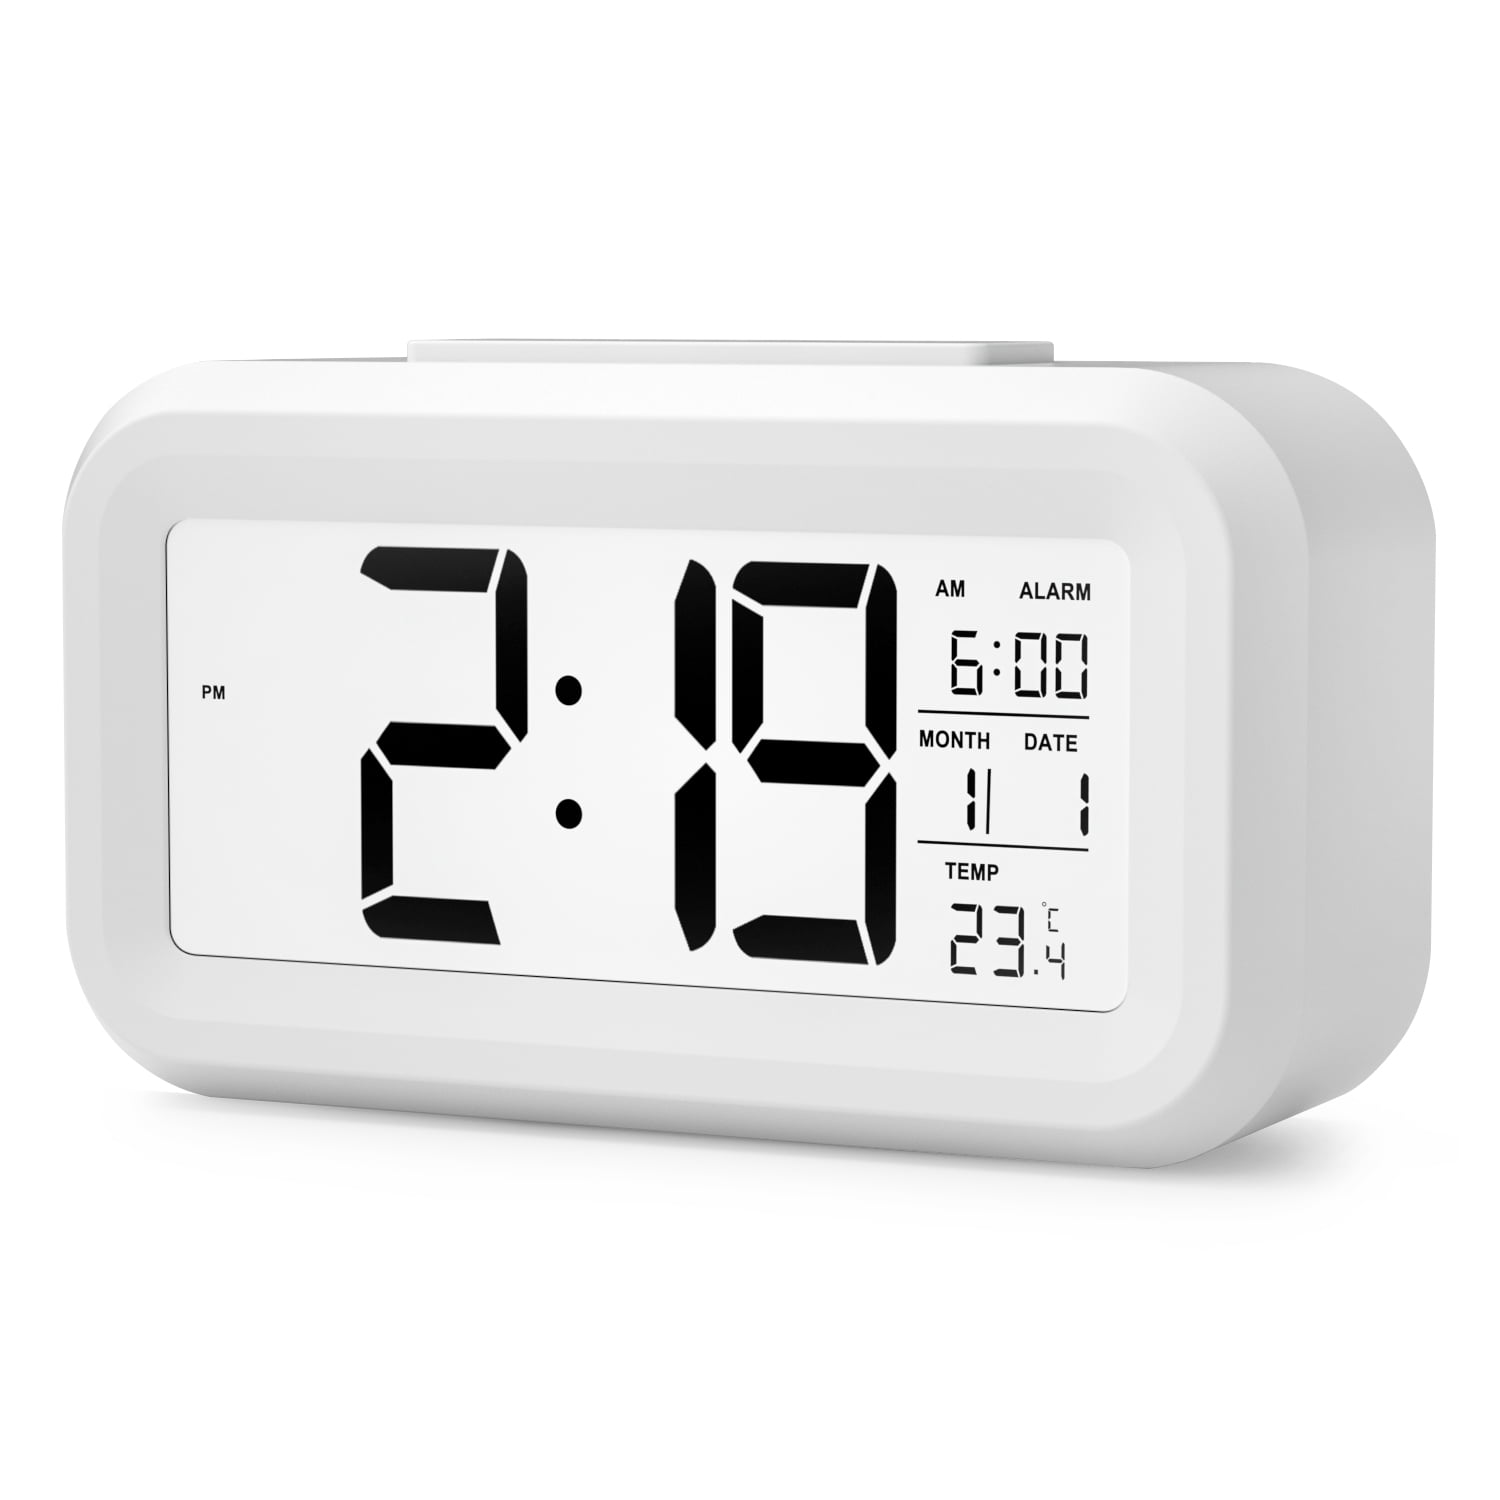 Digital Snooze Alarm Clock Backlight LED Table Clock Time Temperature Calendar 